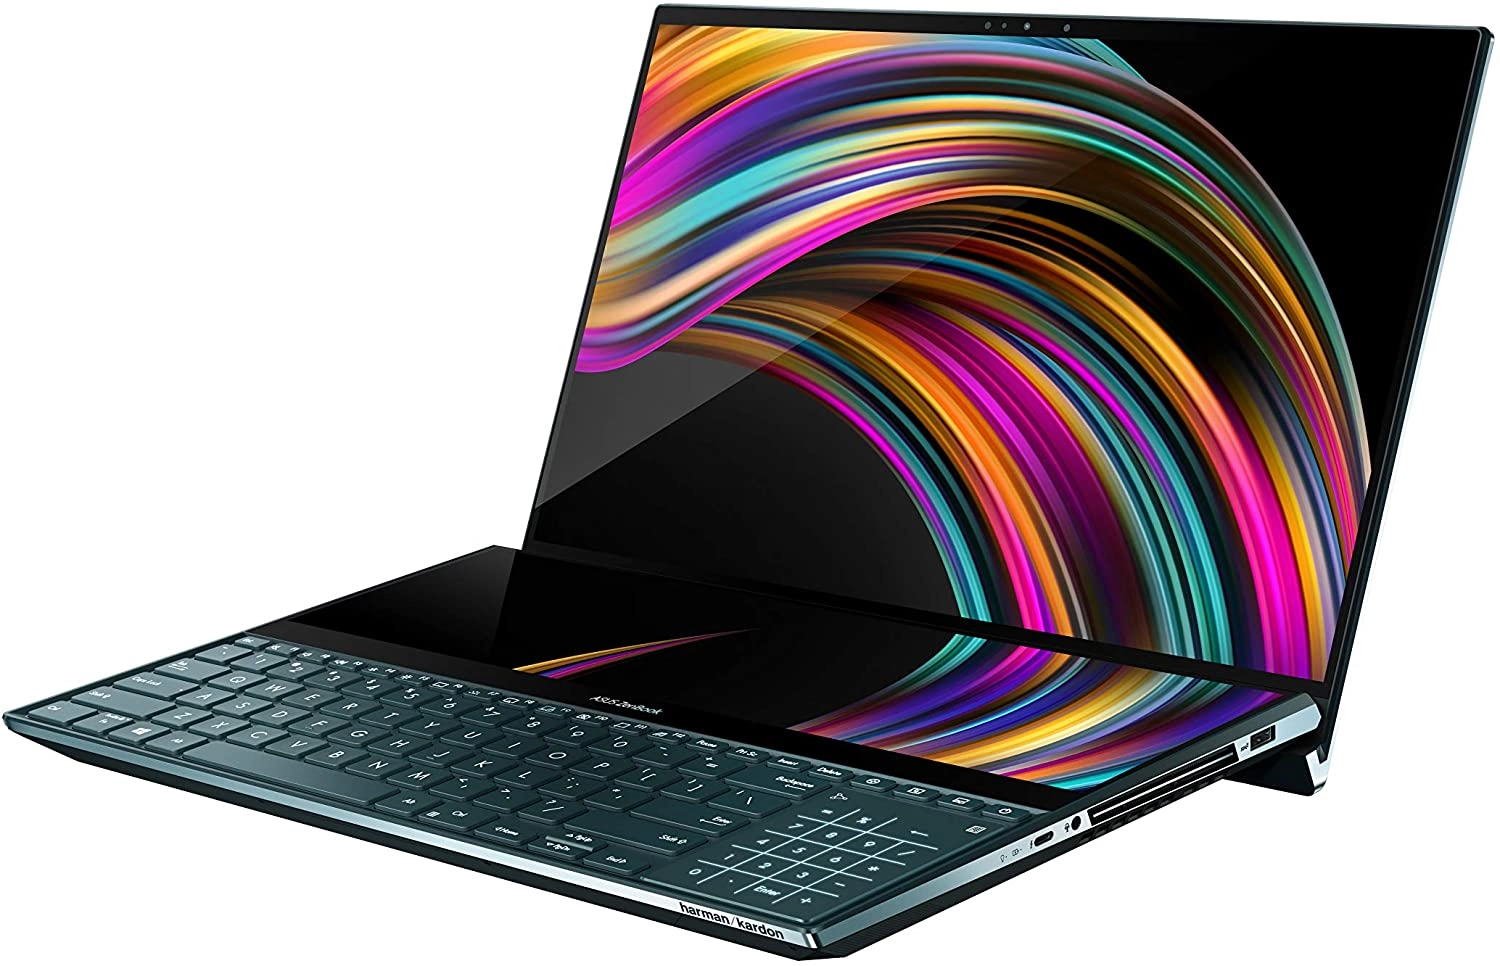 Asus ZenBook Pro Duo 15 laptop image